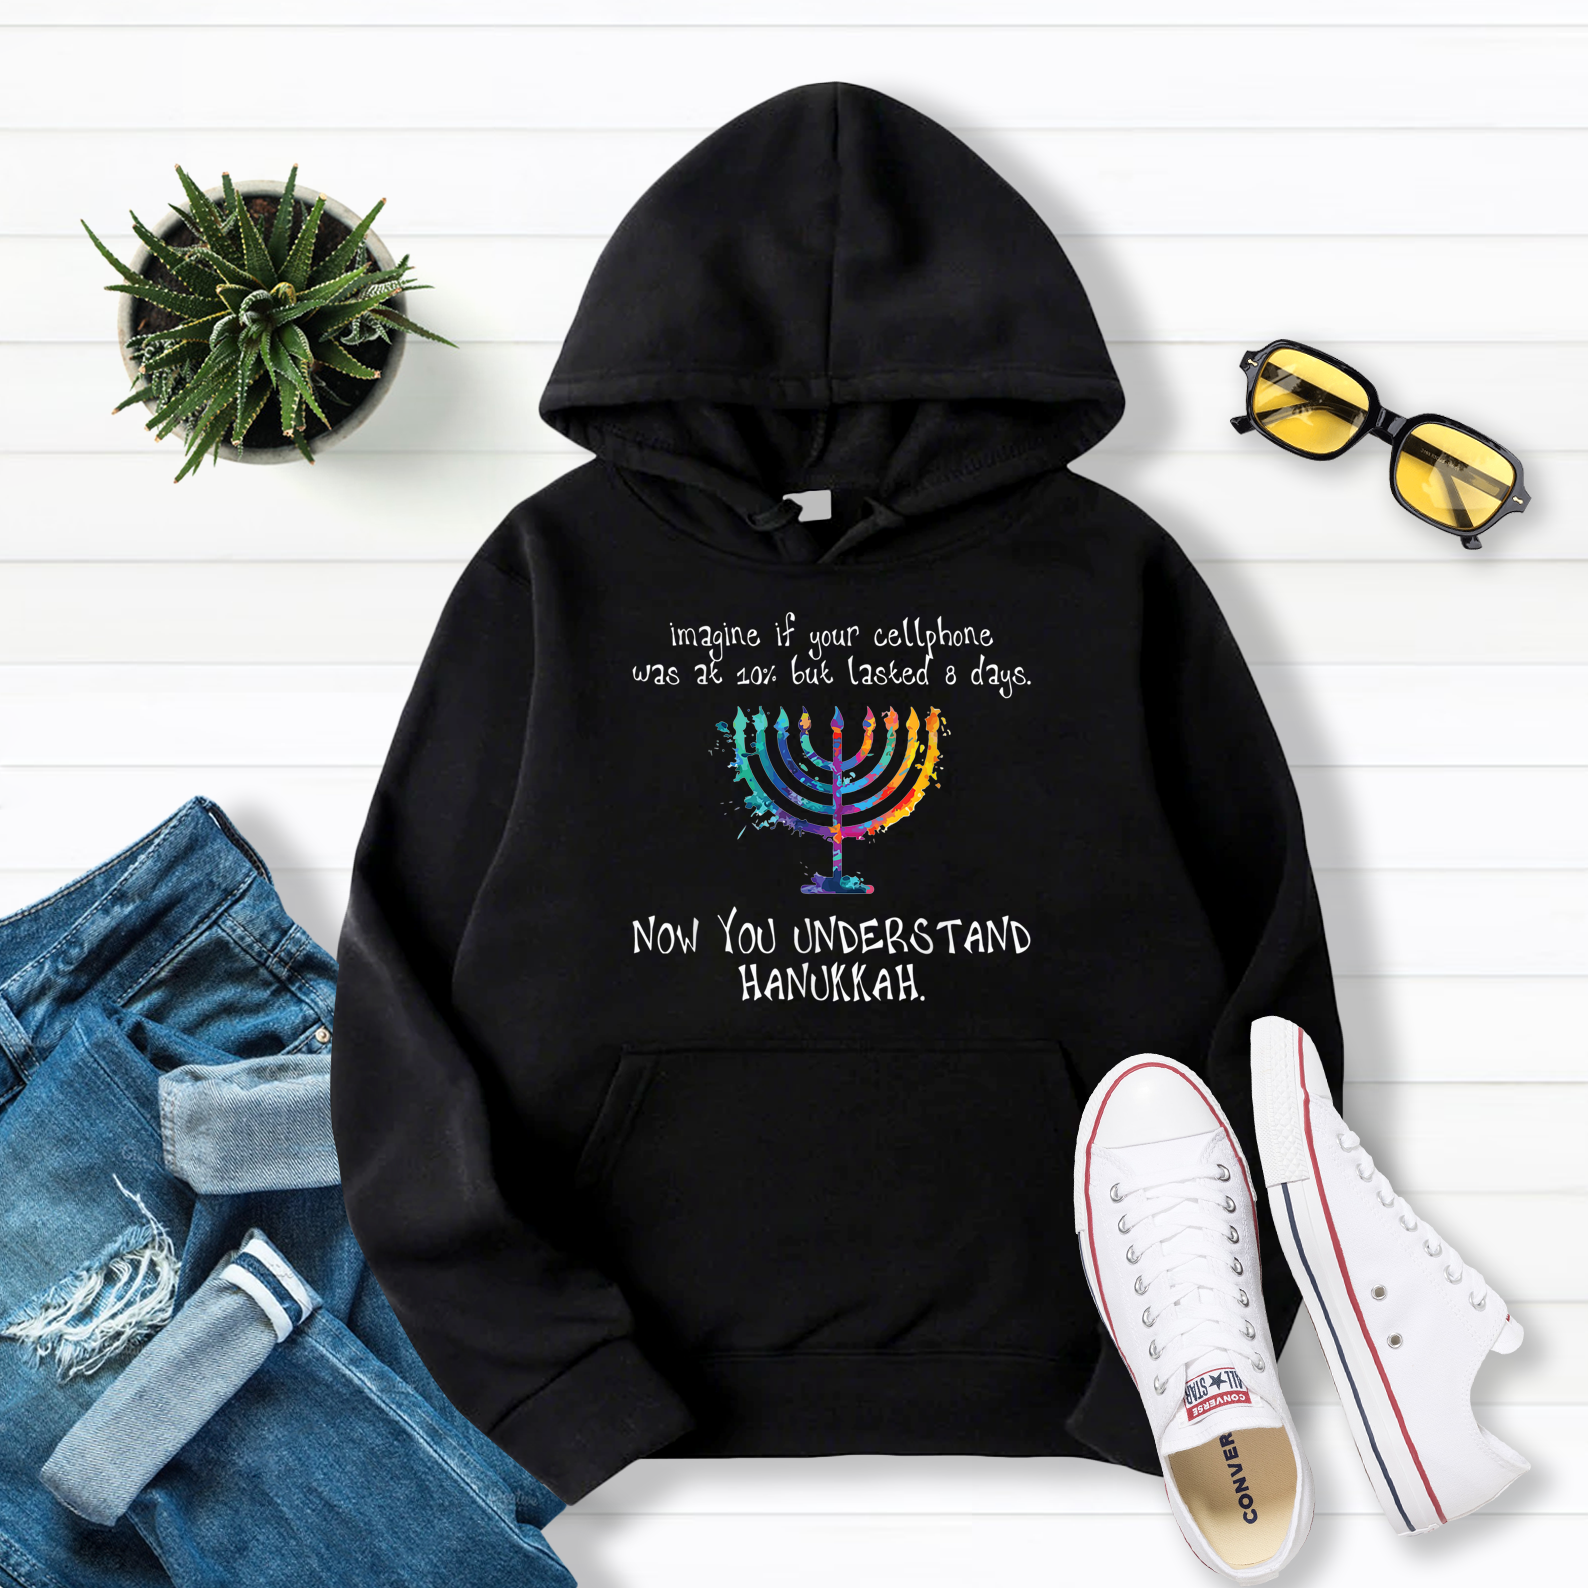 Hanukkah Chanukah Cellphone Meme Funny Jewish Pullover Hoodie Black S-5XL